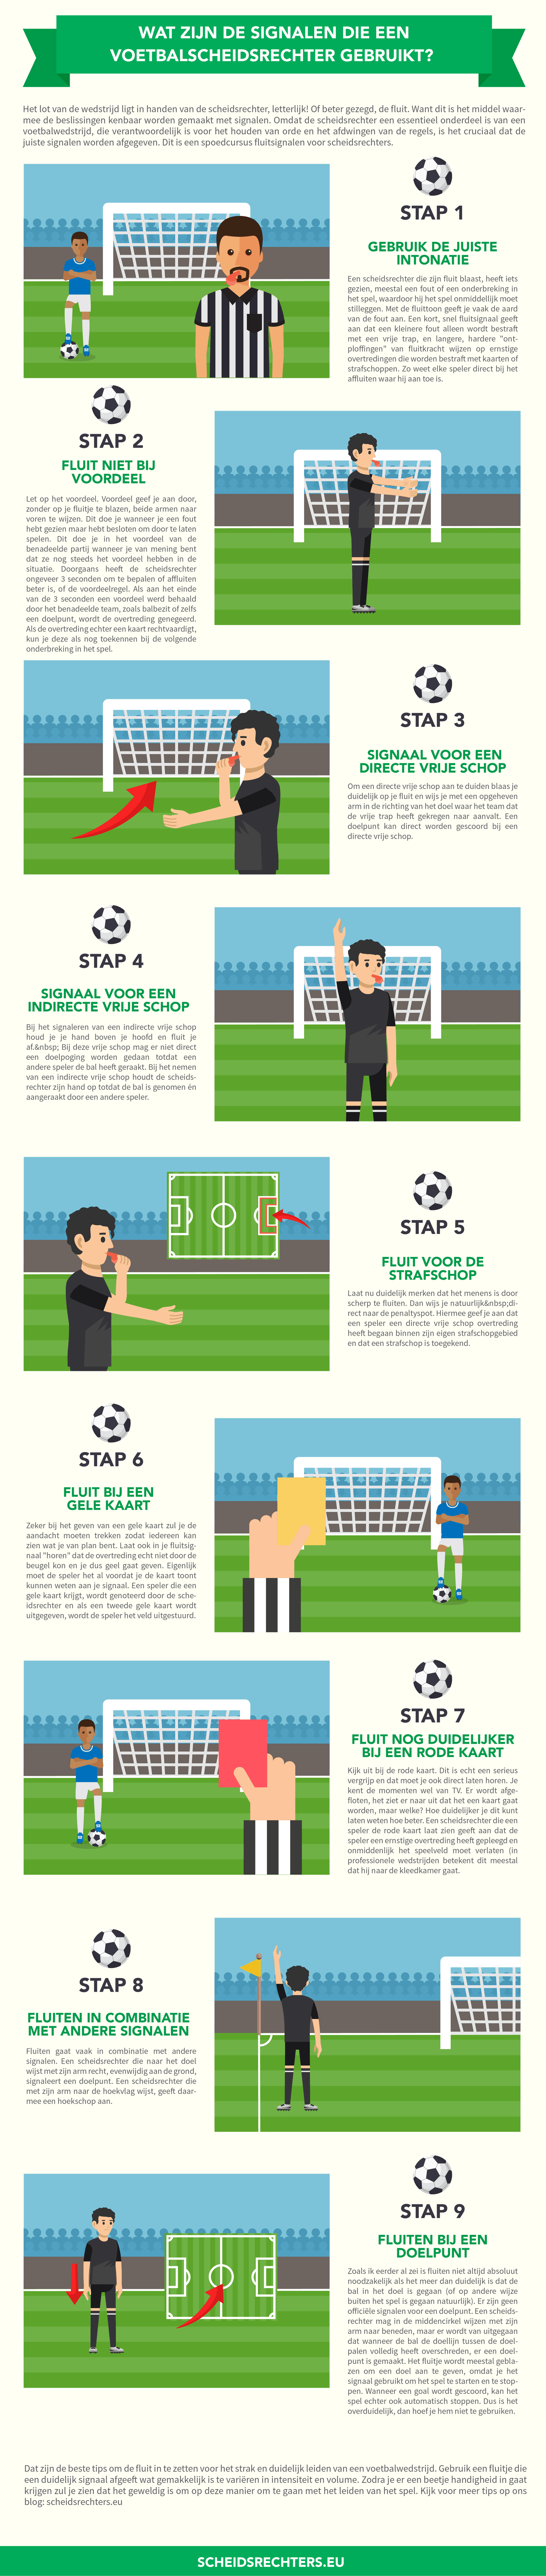 scheidsrechter signalen voetbal infographic